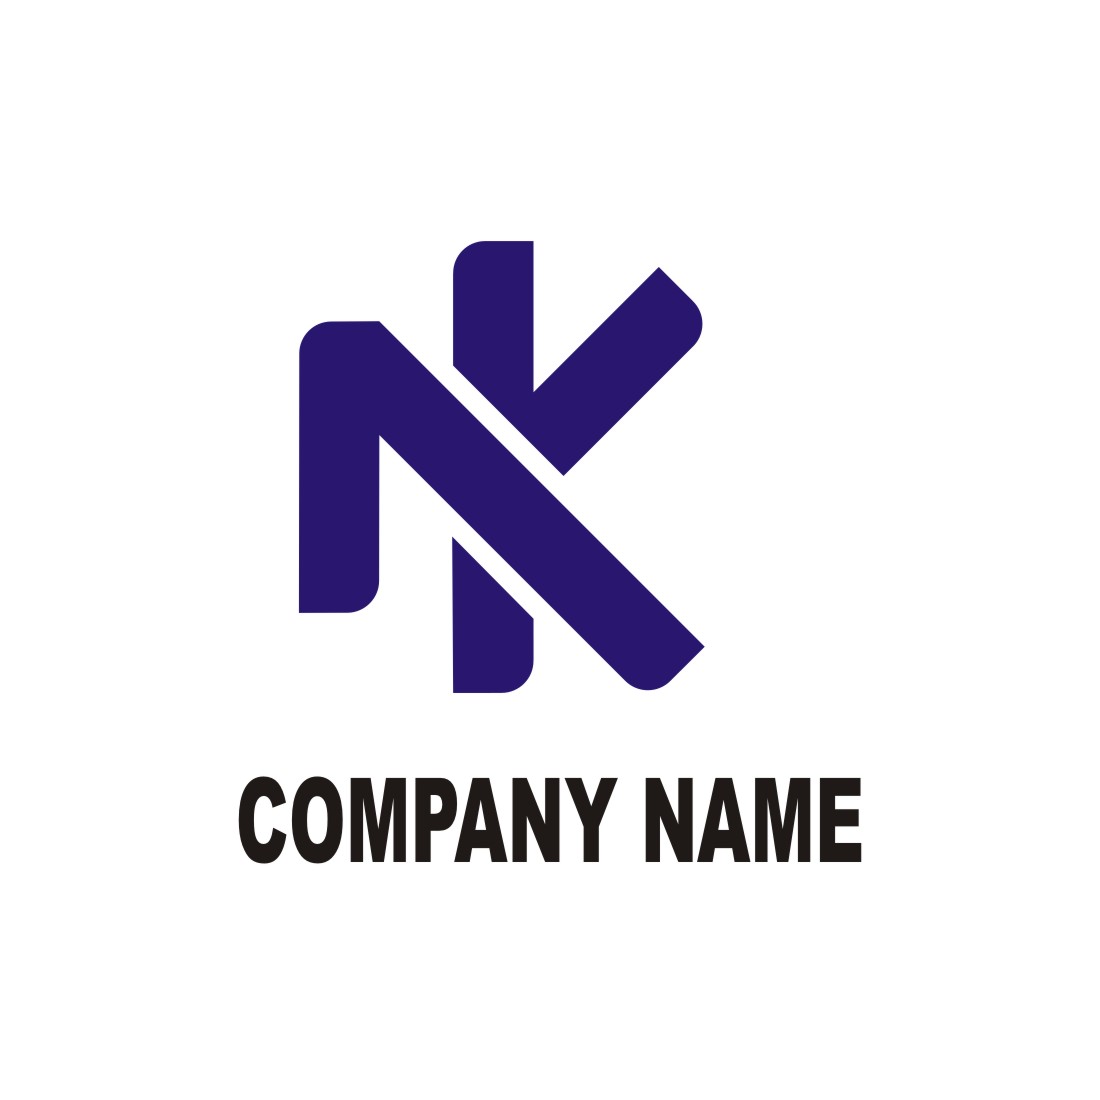 Professional NK monogram logo preview image.